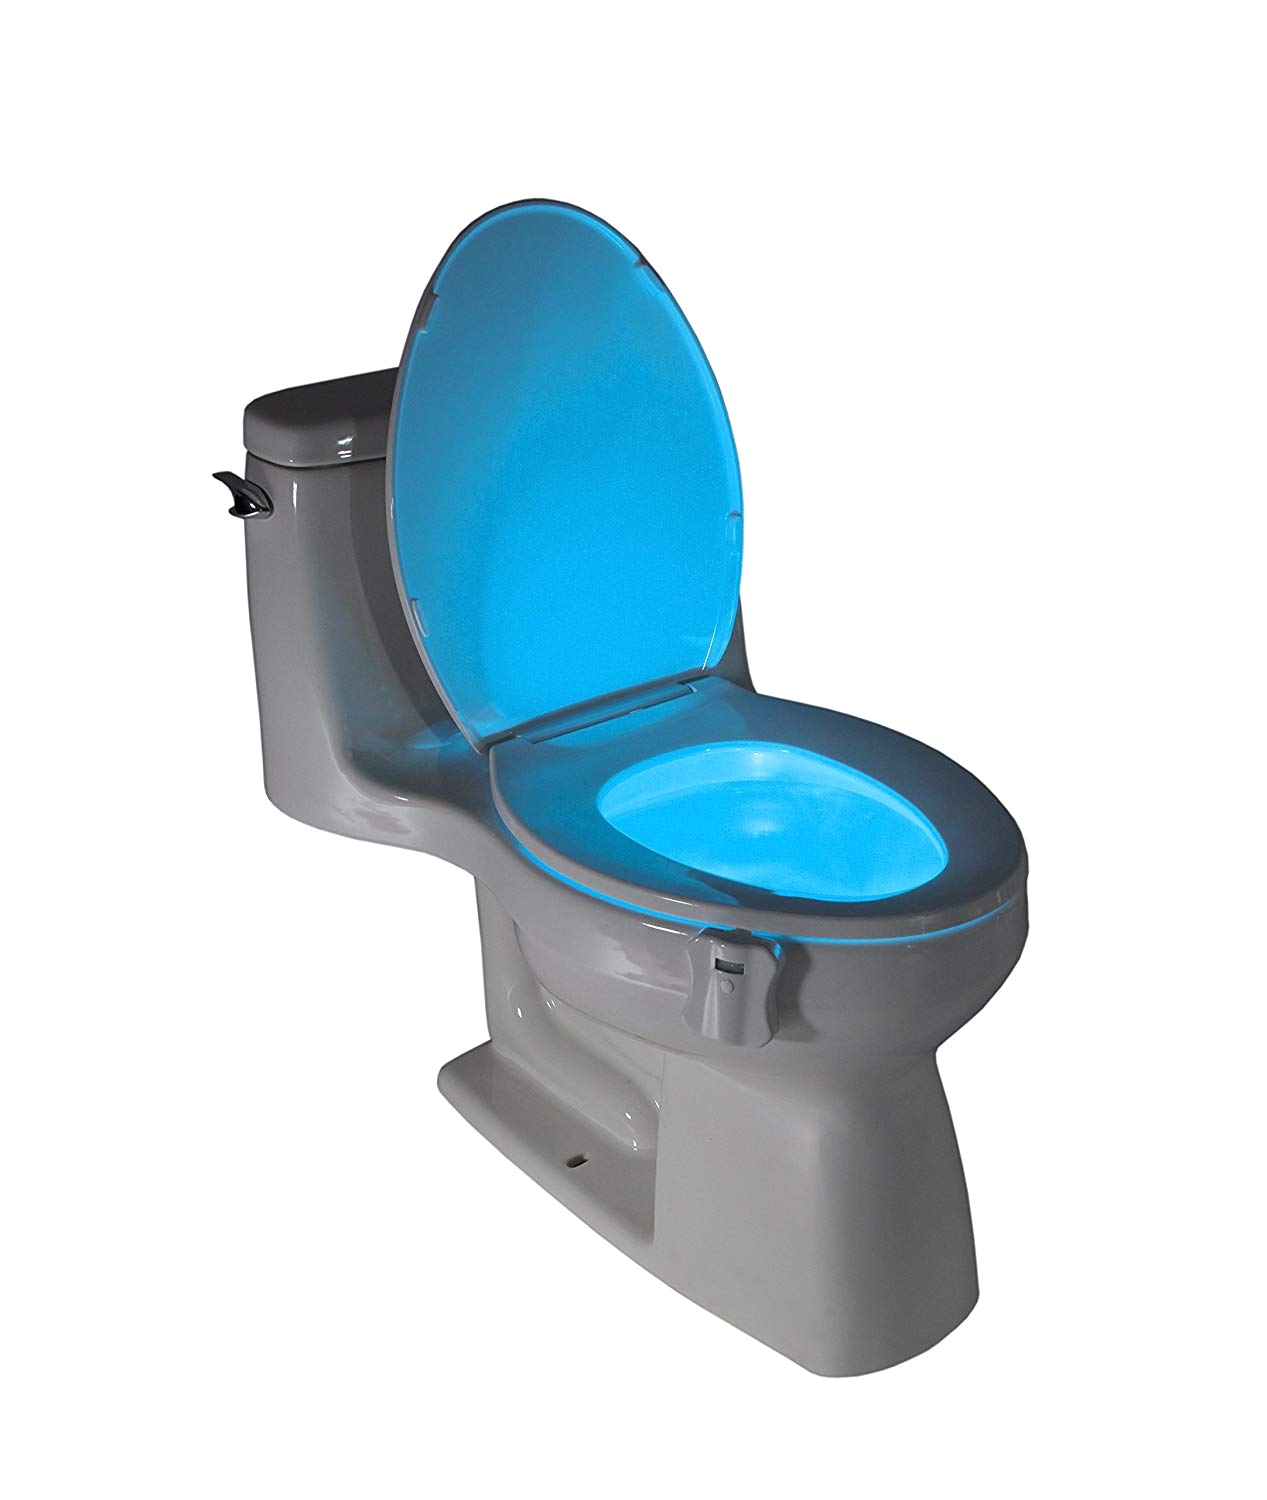 glowbowl gb001 motion activated toilet nightlight 3 pack amazon com